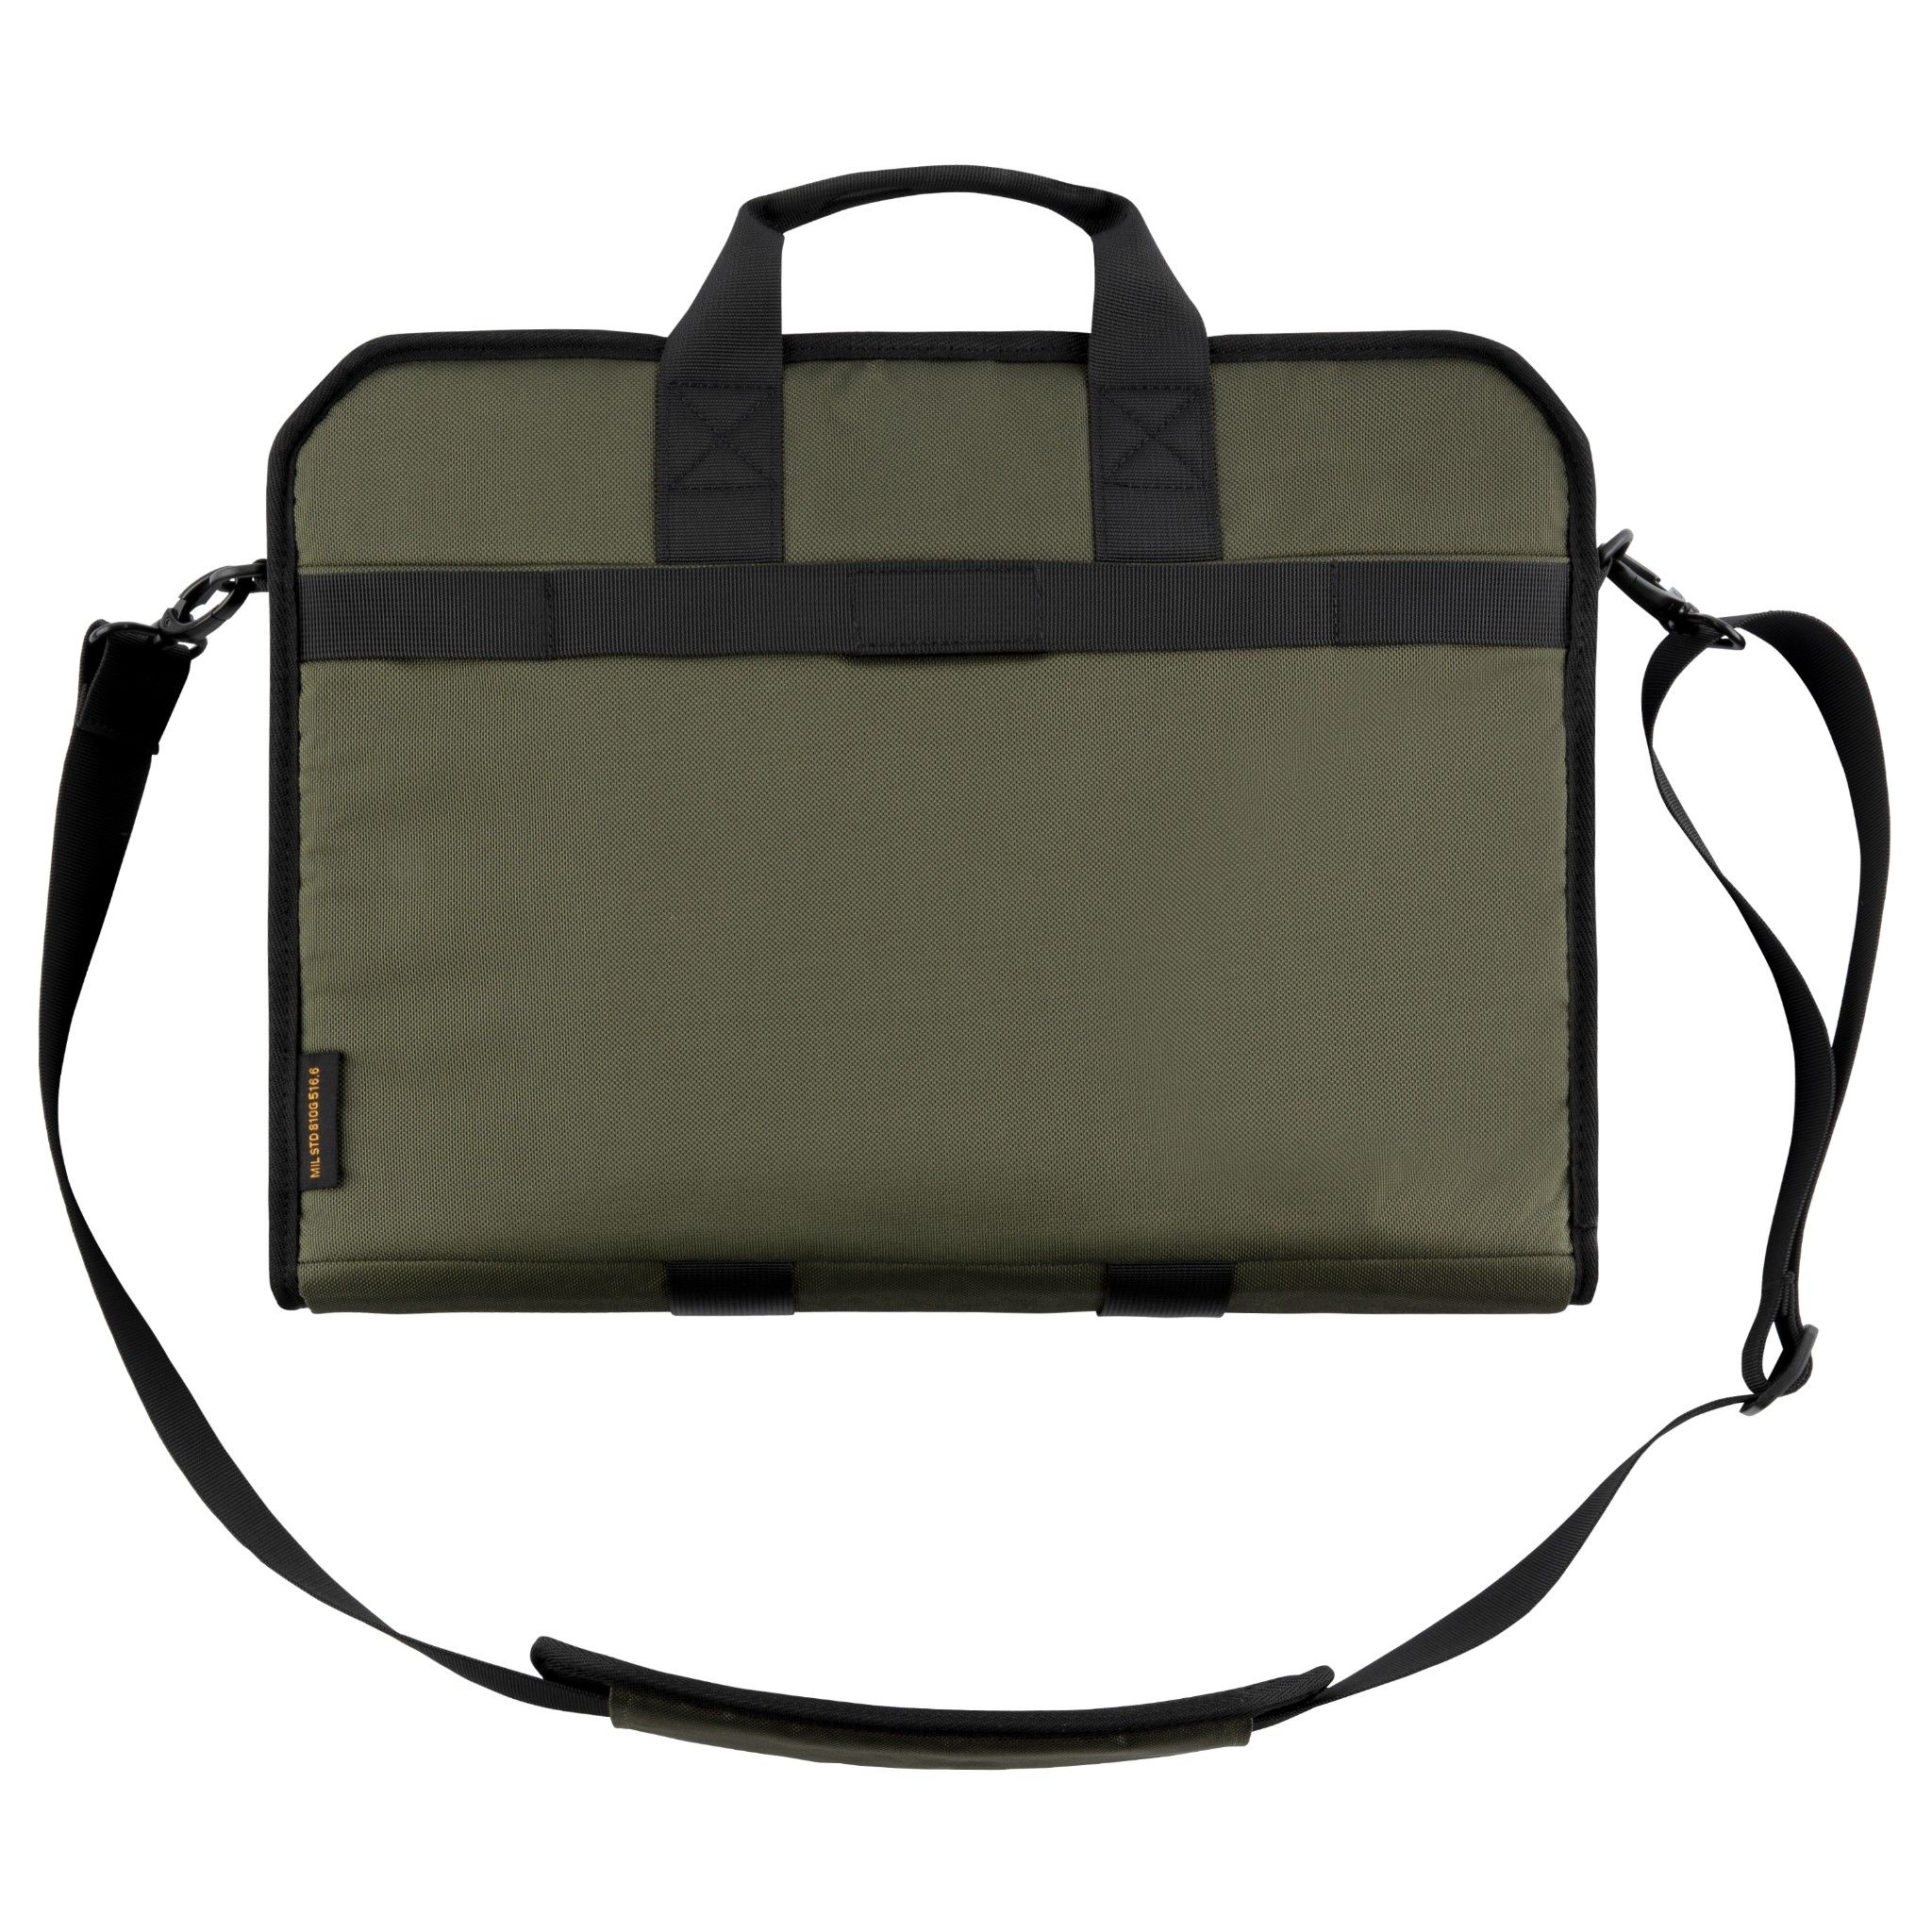  Túi chống sốc UAG Slim Brief Case (16 inch) 